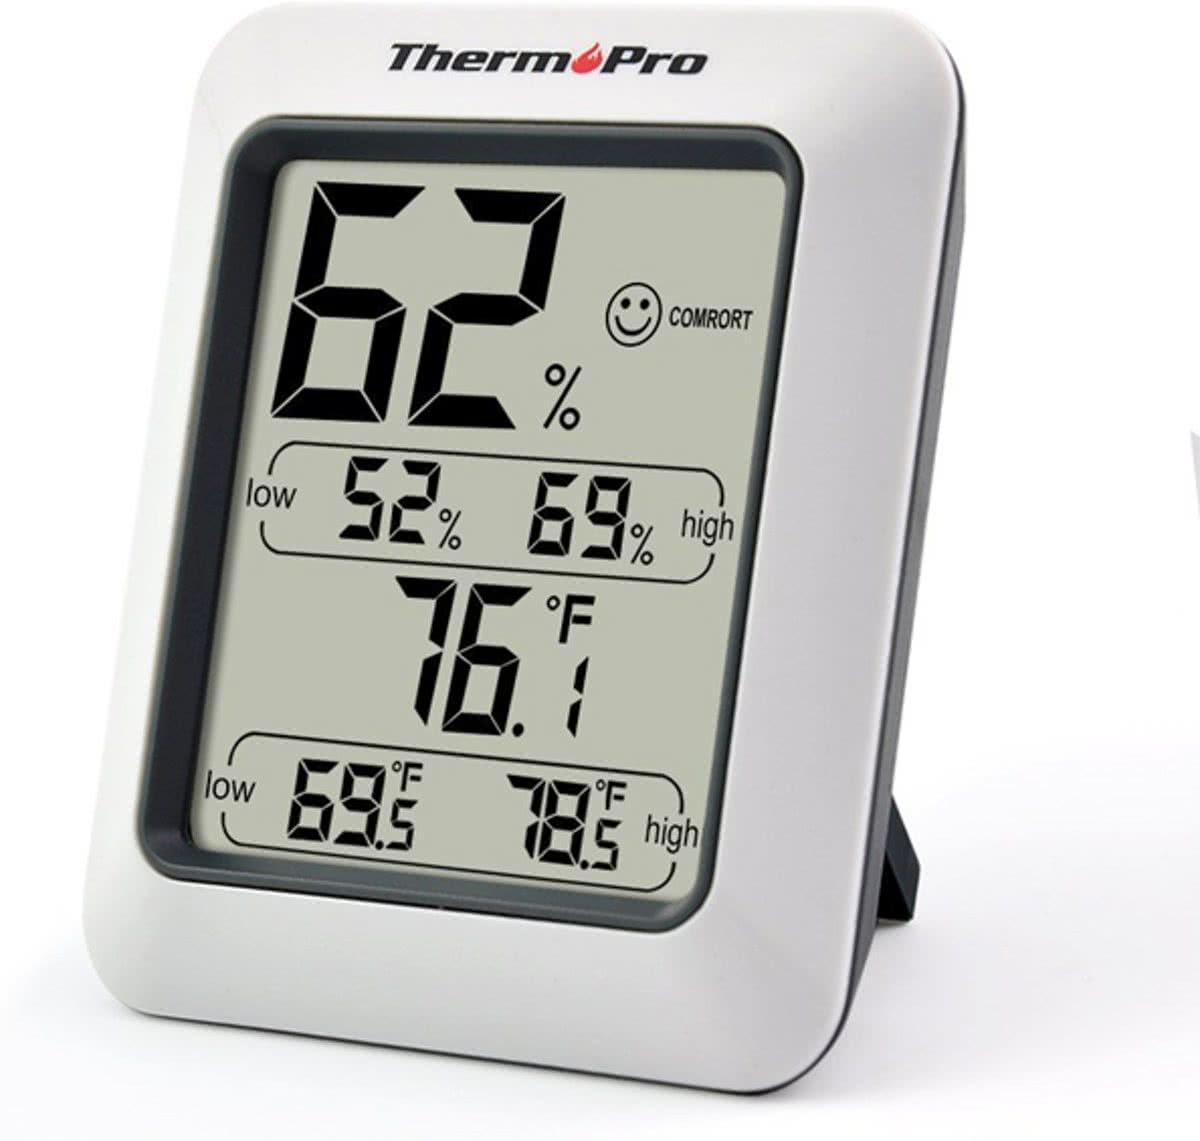 Thermo Pro Digitale Thermometer voor binnen met Vochtigheidsmeter TP50 Hygrometer Digitaal - Wit weerstation kopen? | Kieskeurig.nl helpt je kiezen